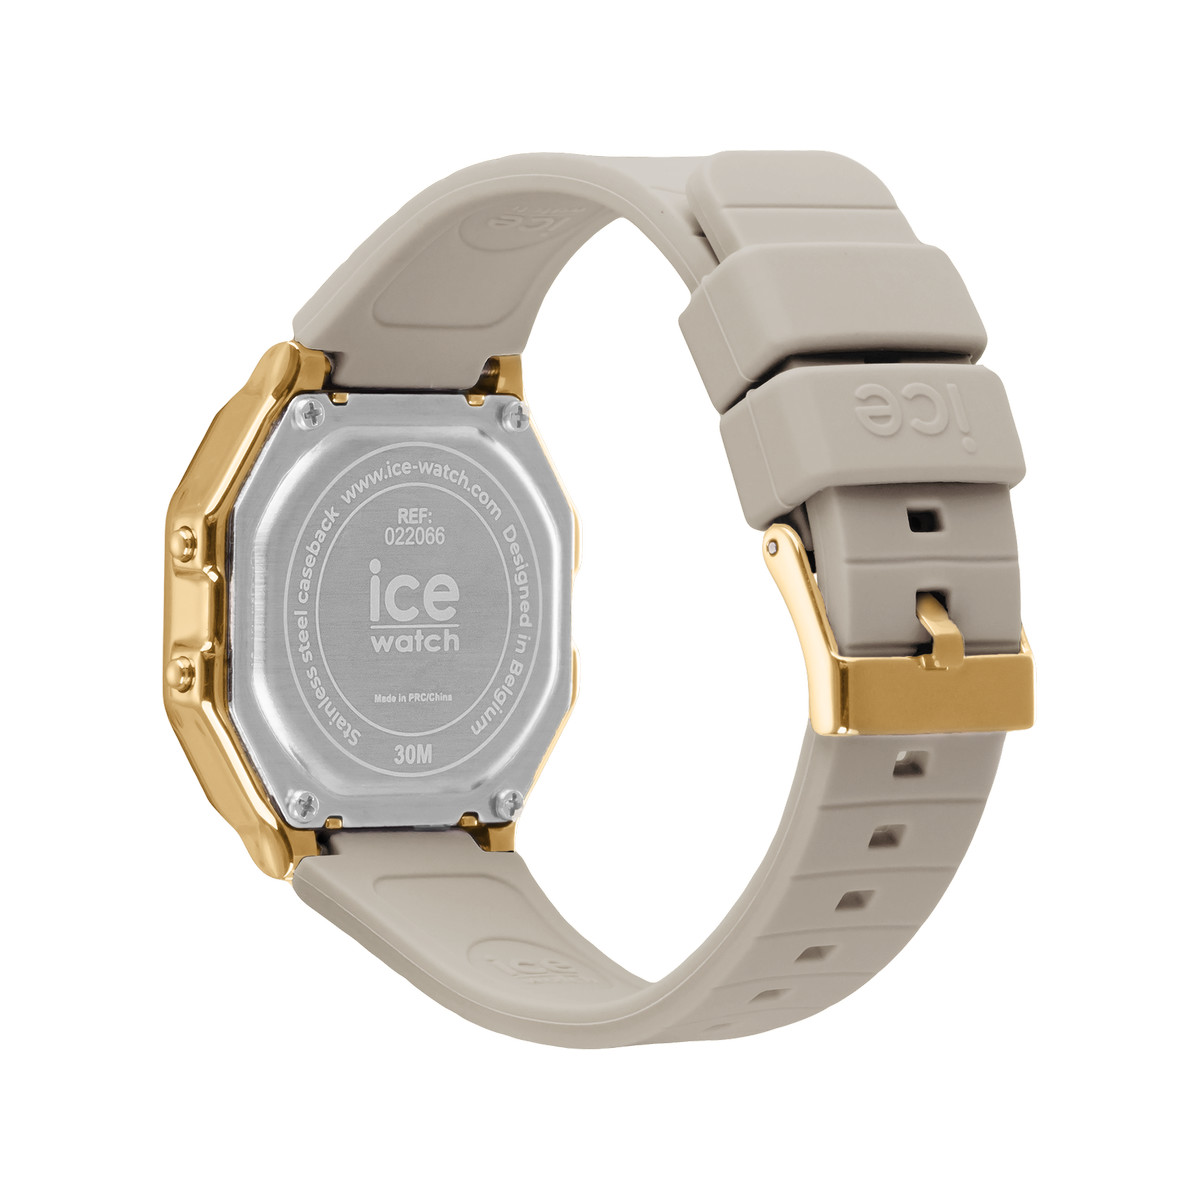 Montre ICE WATCH ice digit retro femme bracelet silicone gris - vue 3